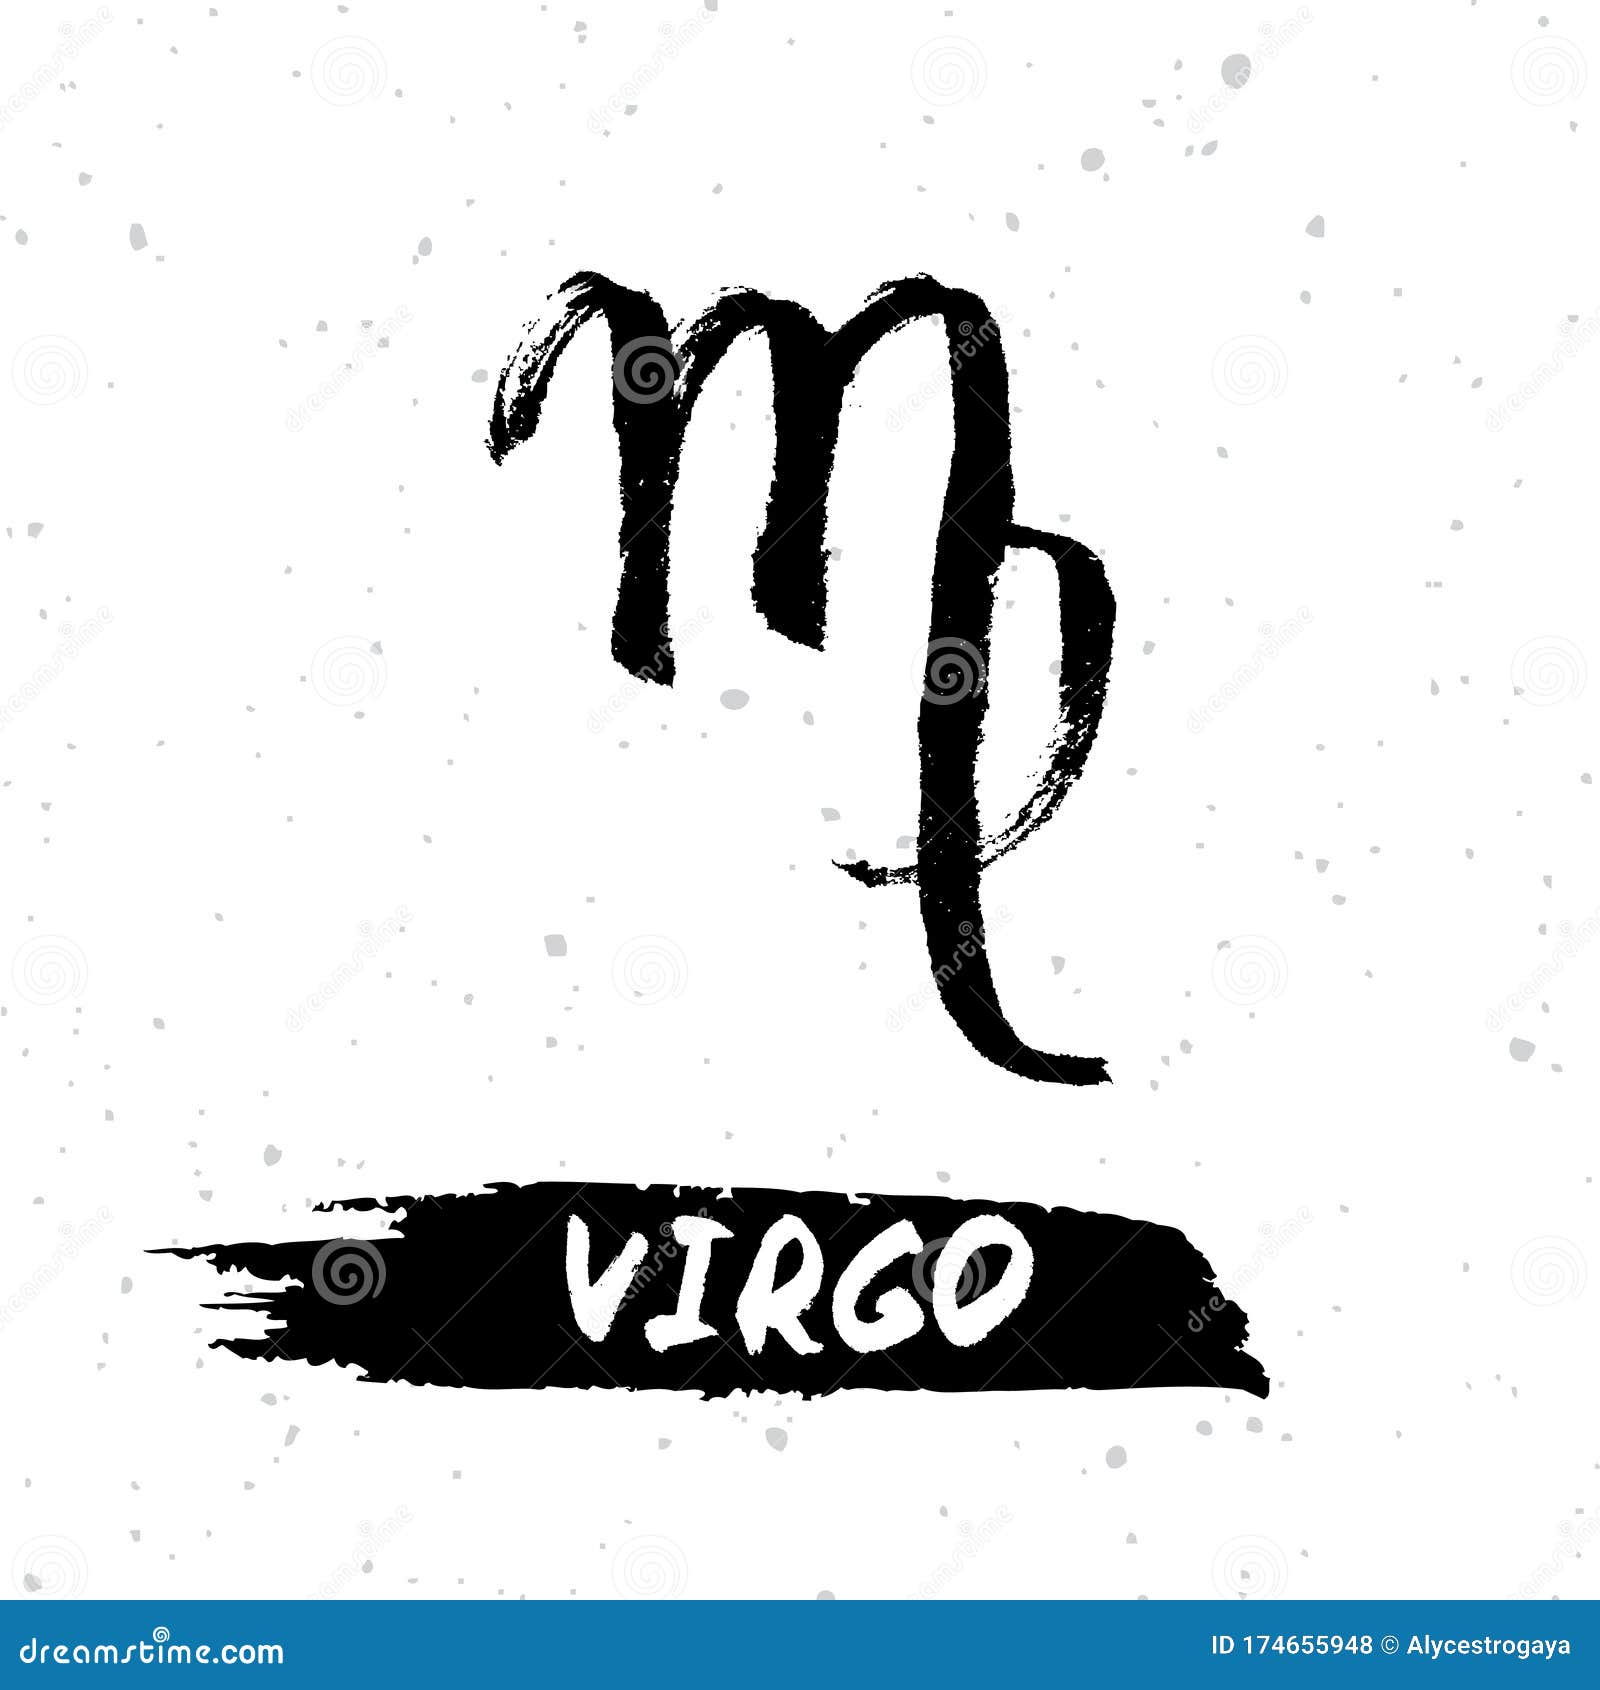 Astrological Ink Brush Illustration. Virgo Horoscope Sign, Symbol ...